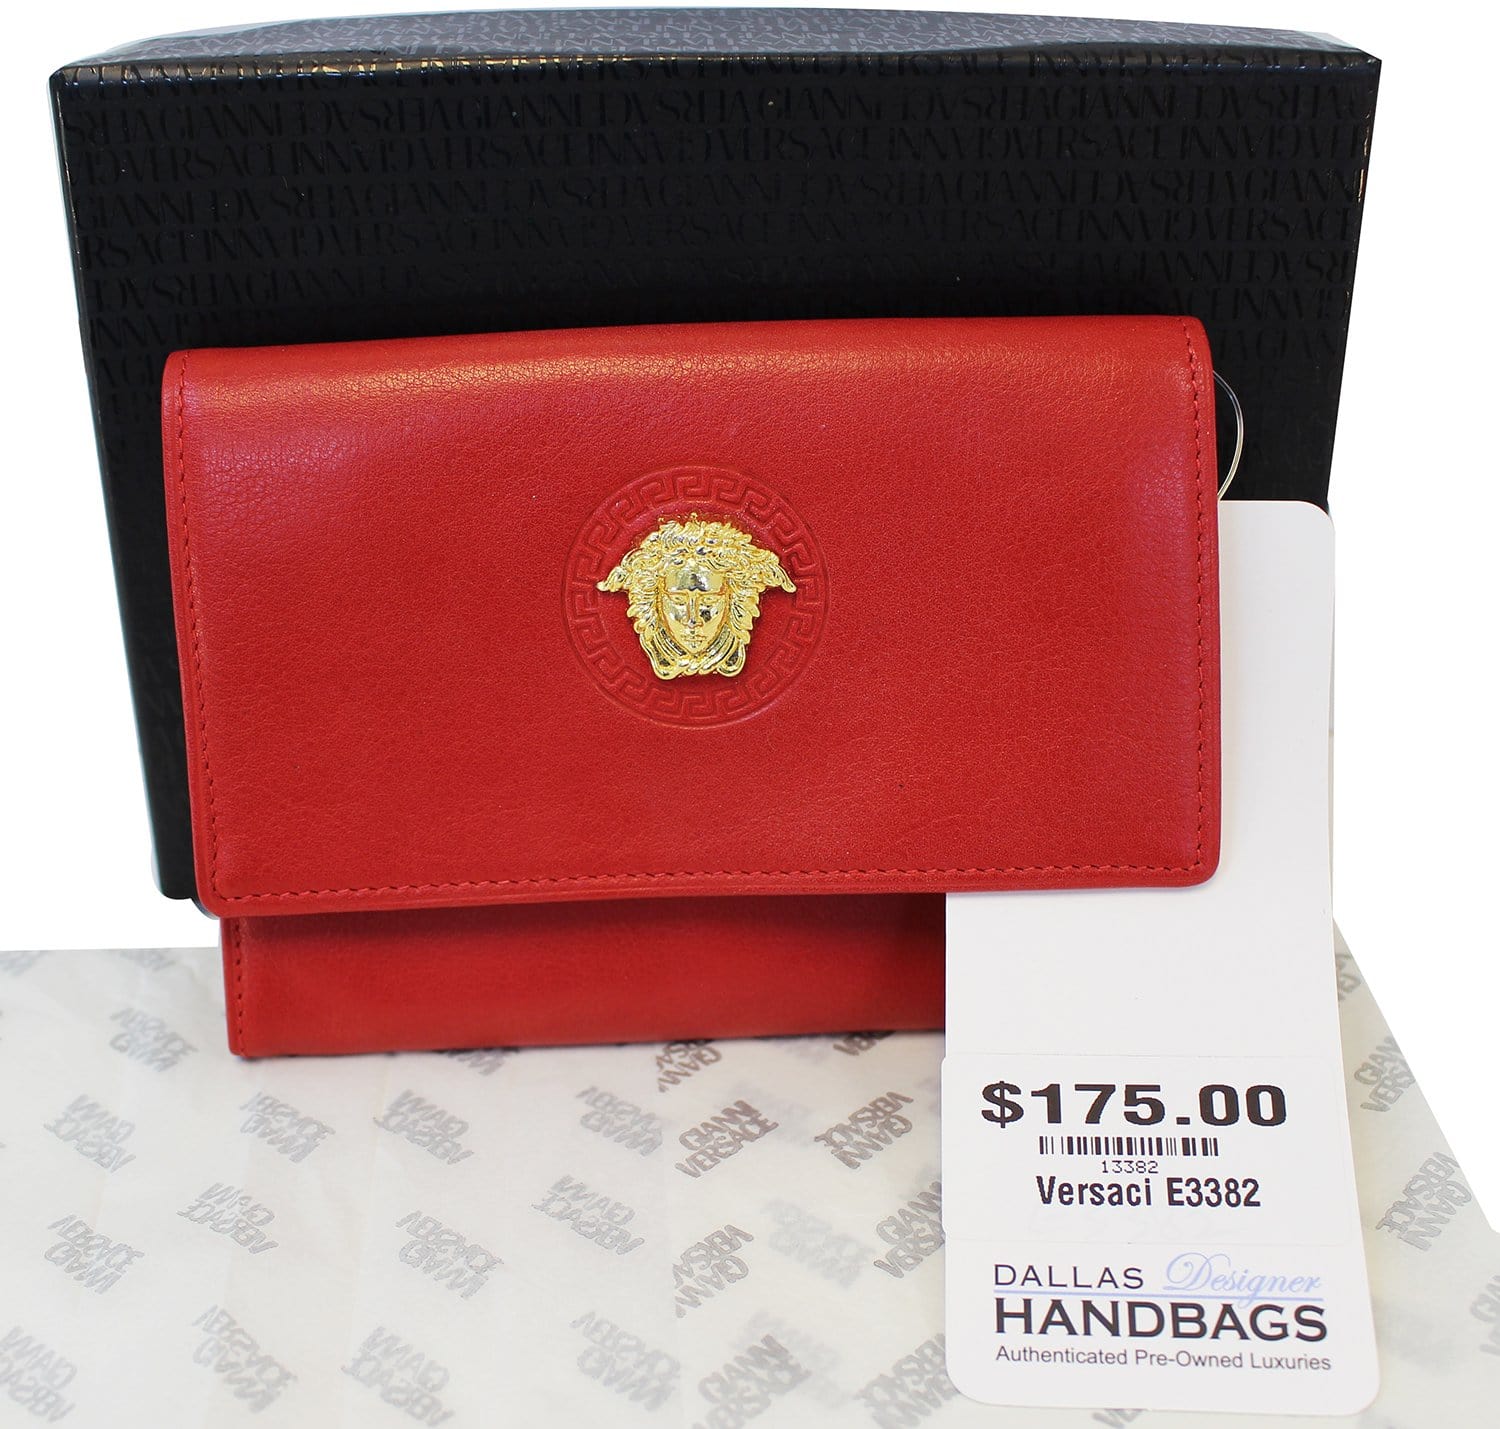 Women's Red Designer Handbags & Wallets